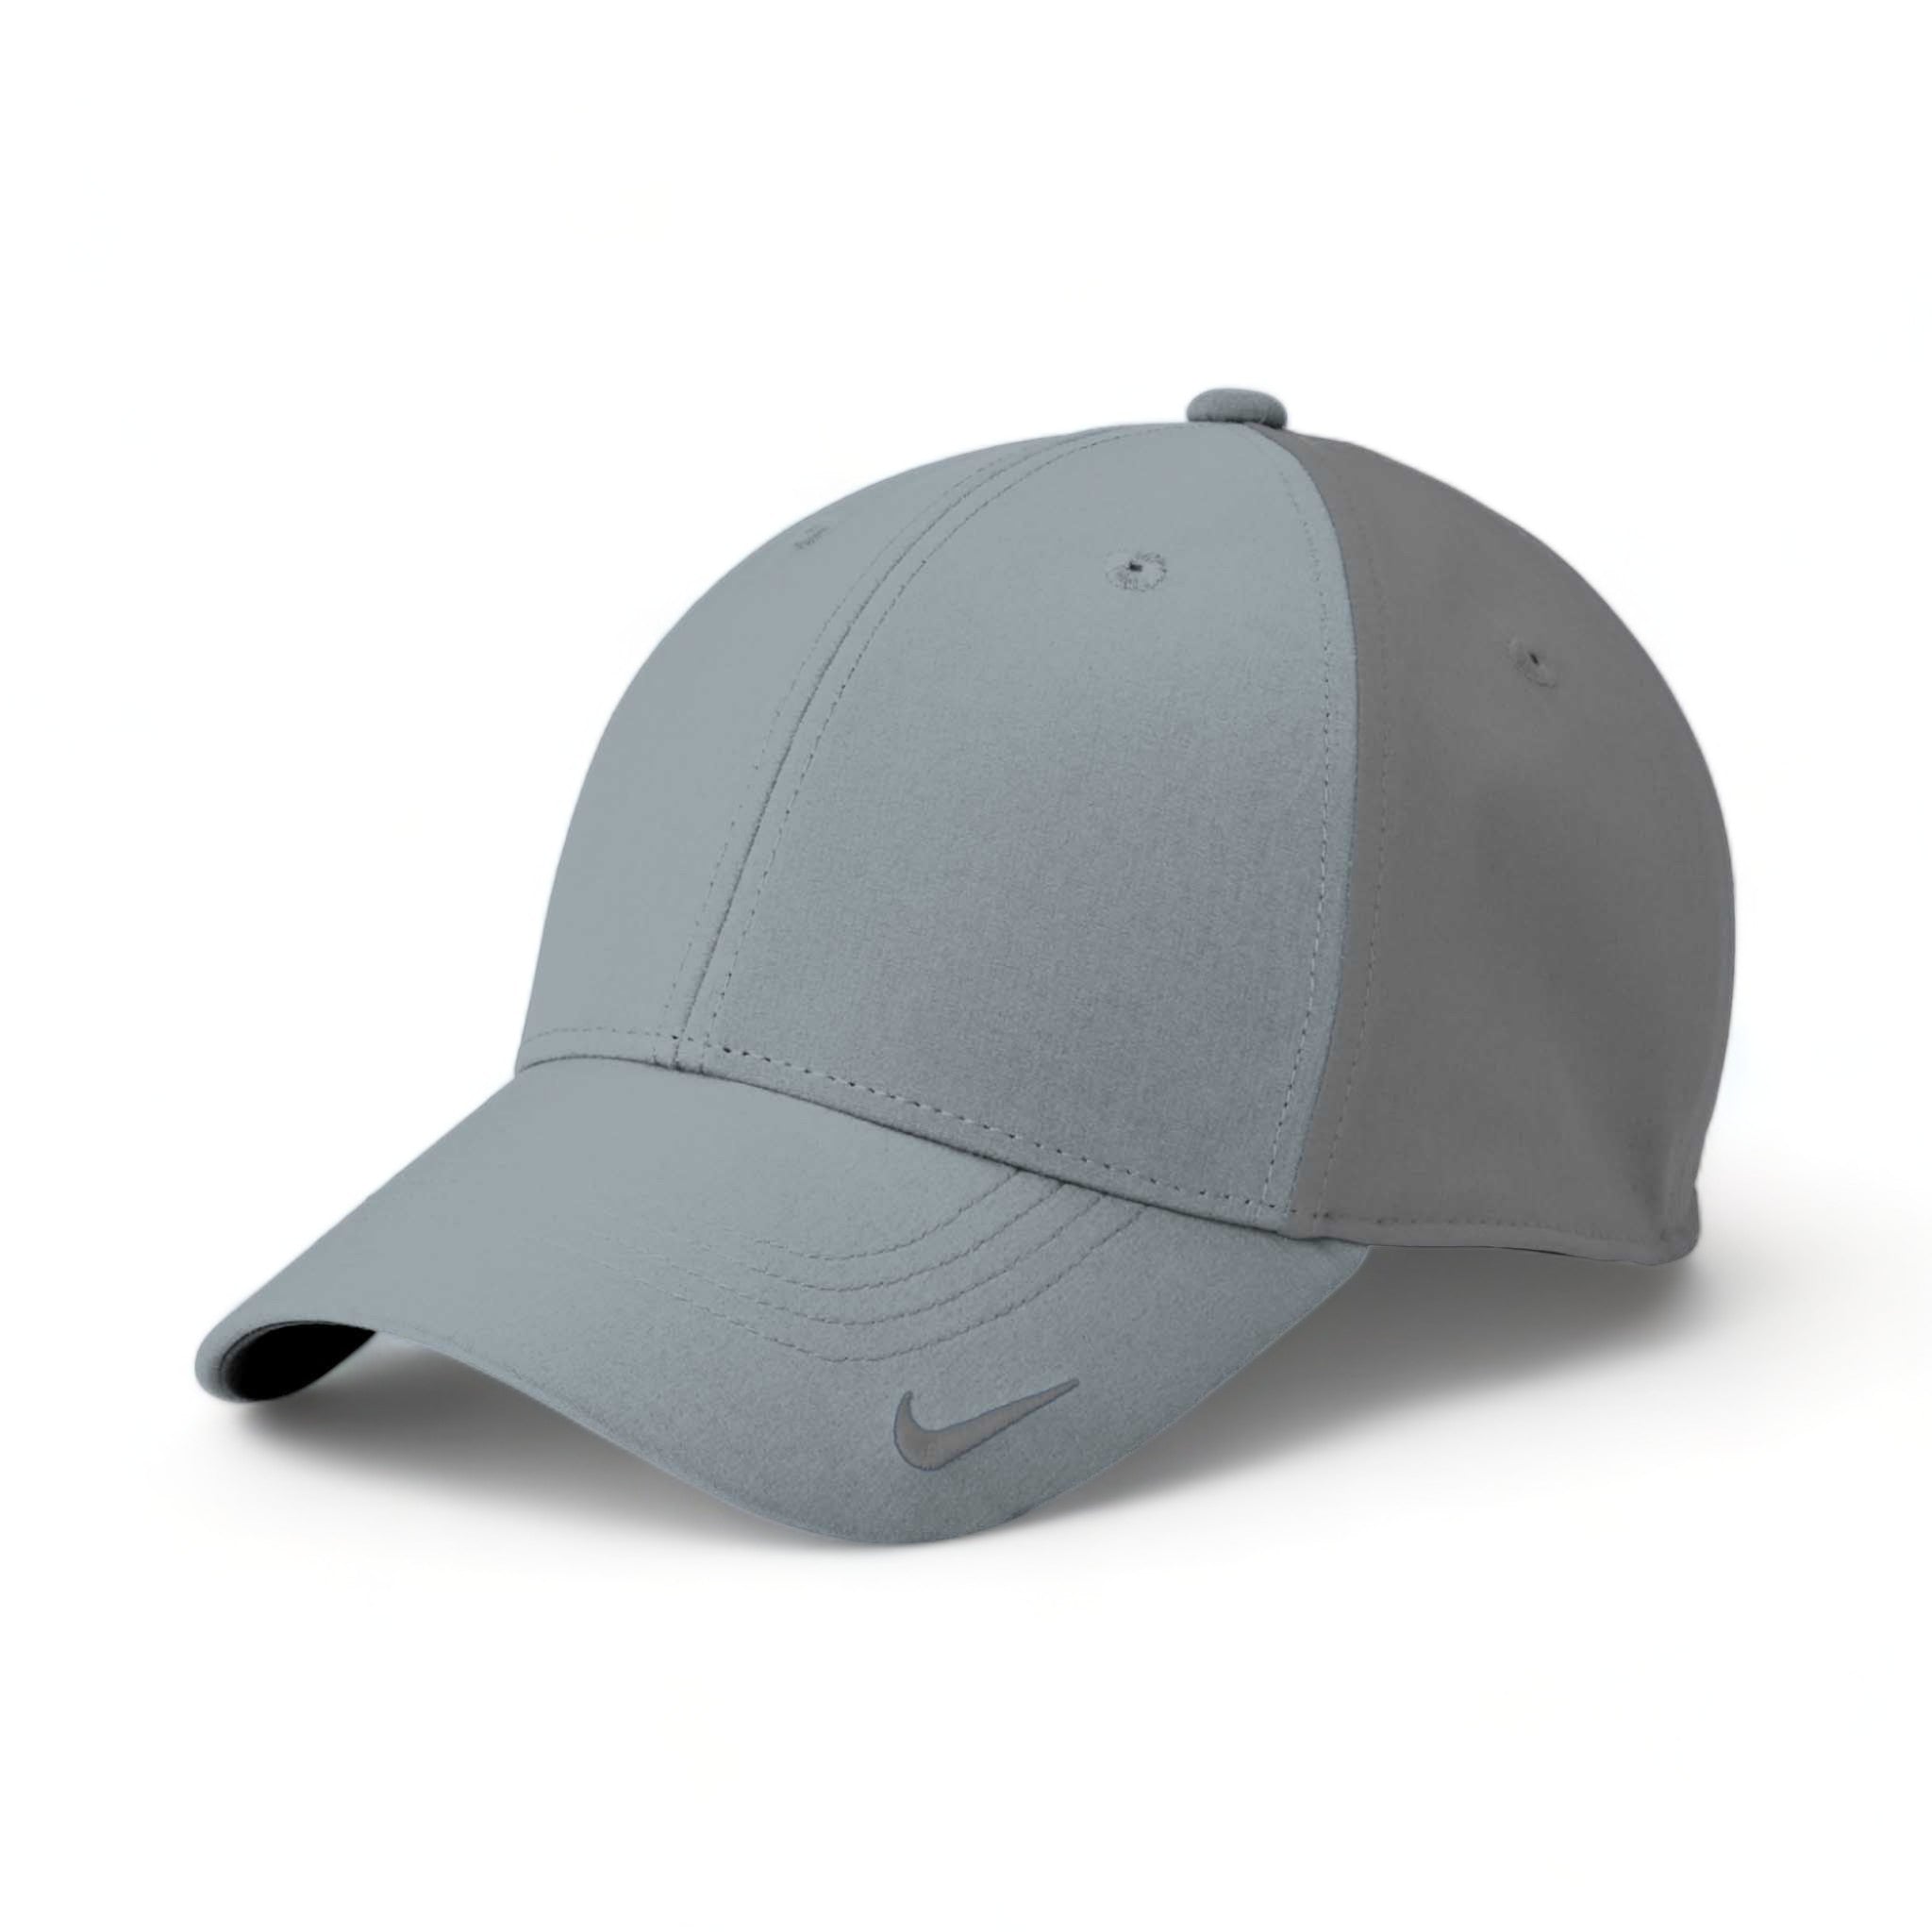 Side view of Nike NKFB6447 custom hat in cool grey and dark grey